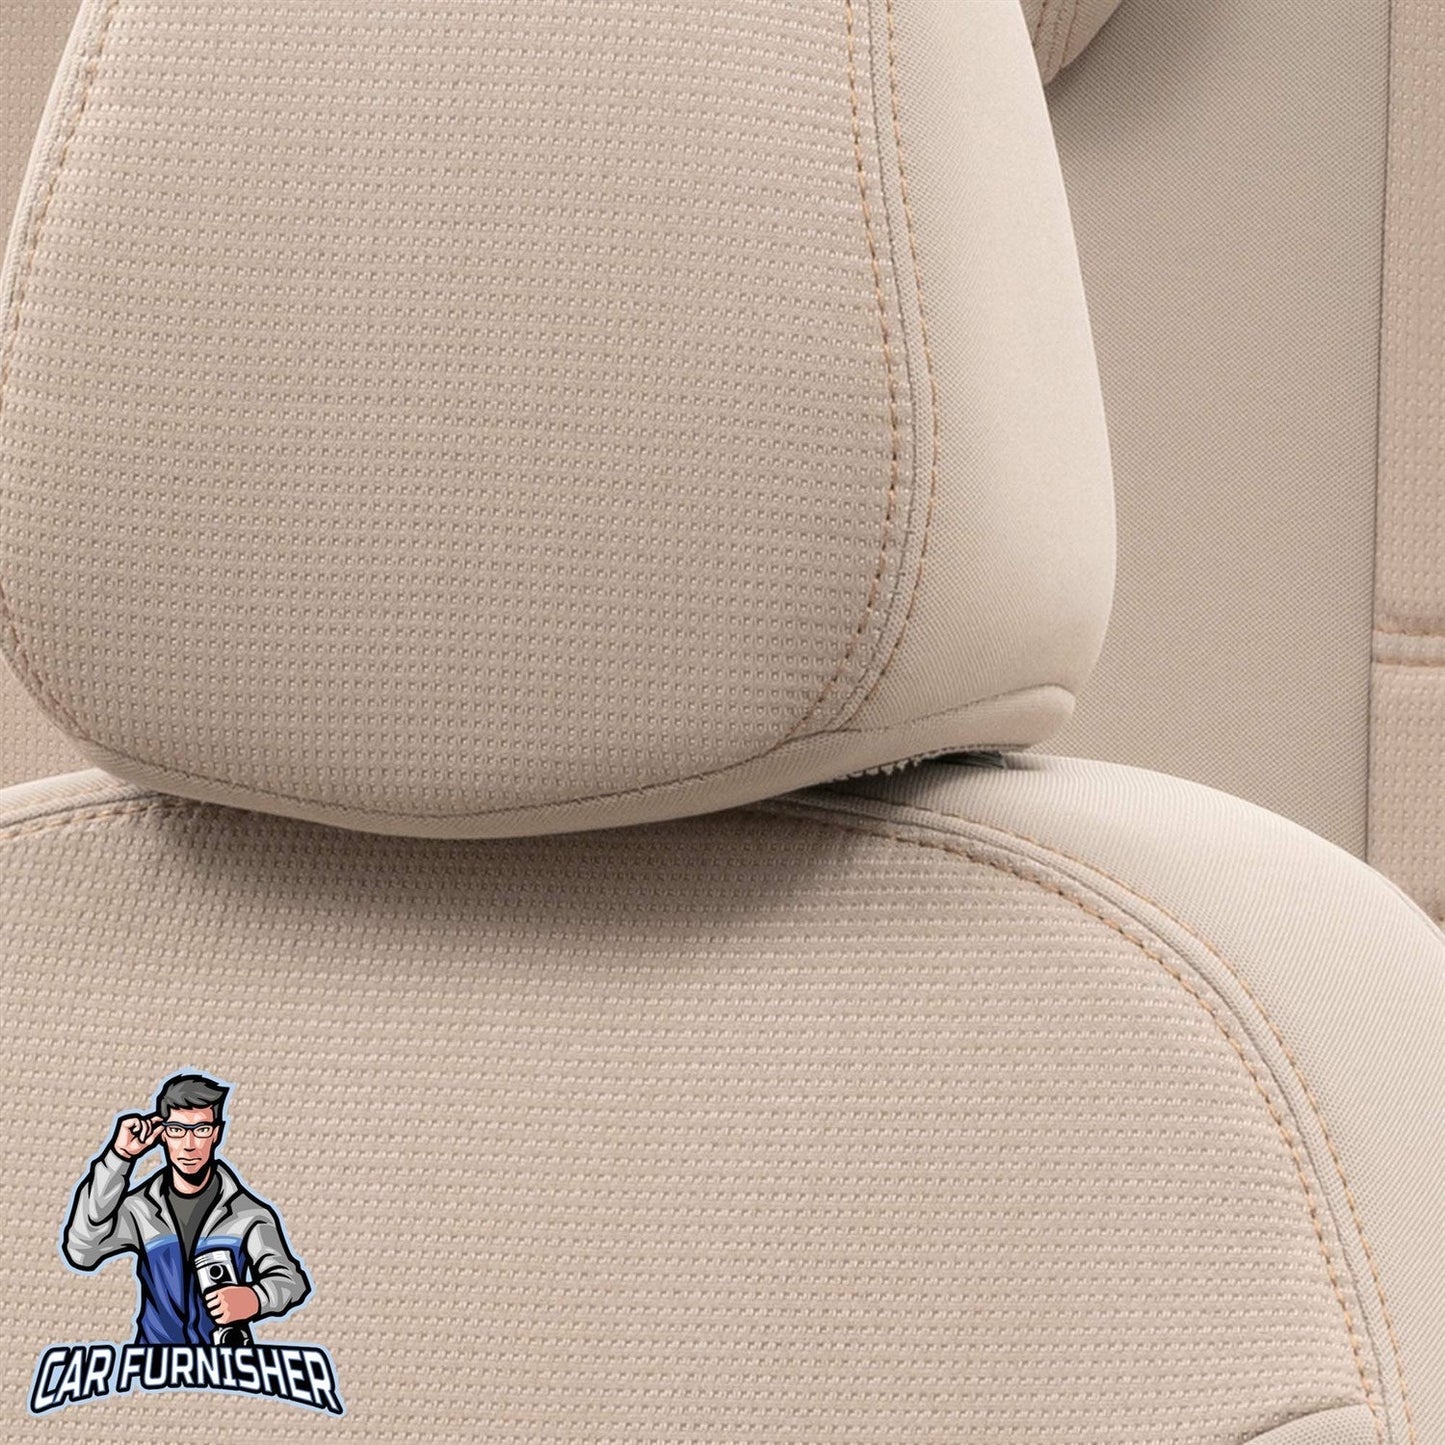 Fiat Panda Seat Covers Original Jacquard Design Beige Jacquard Fabric